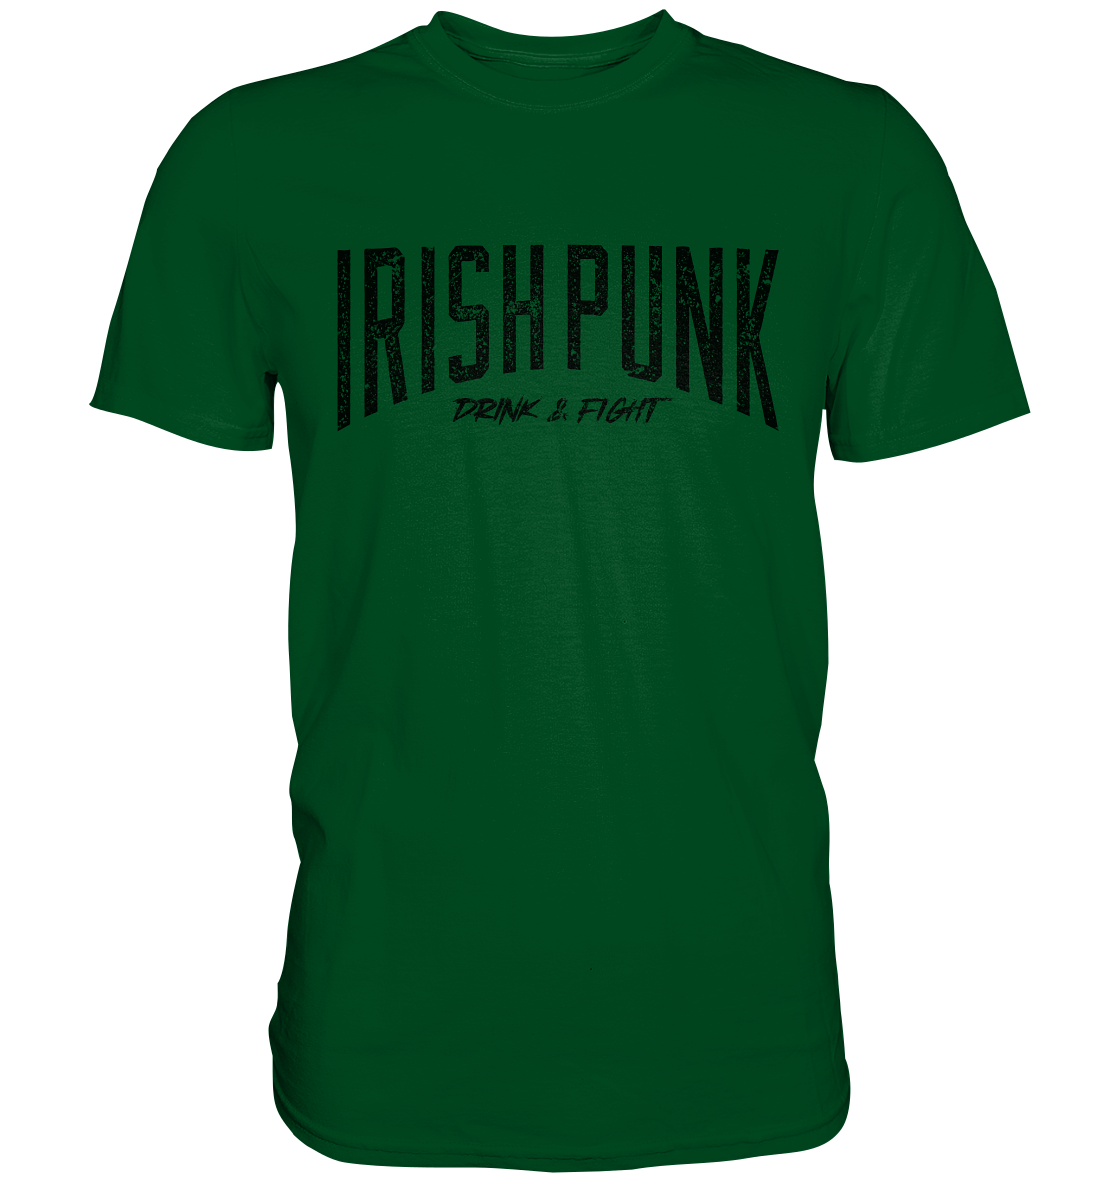 Irish Punk "Drink & Fight" - Premium Shirt